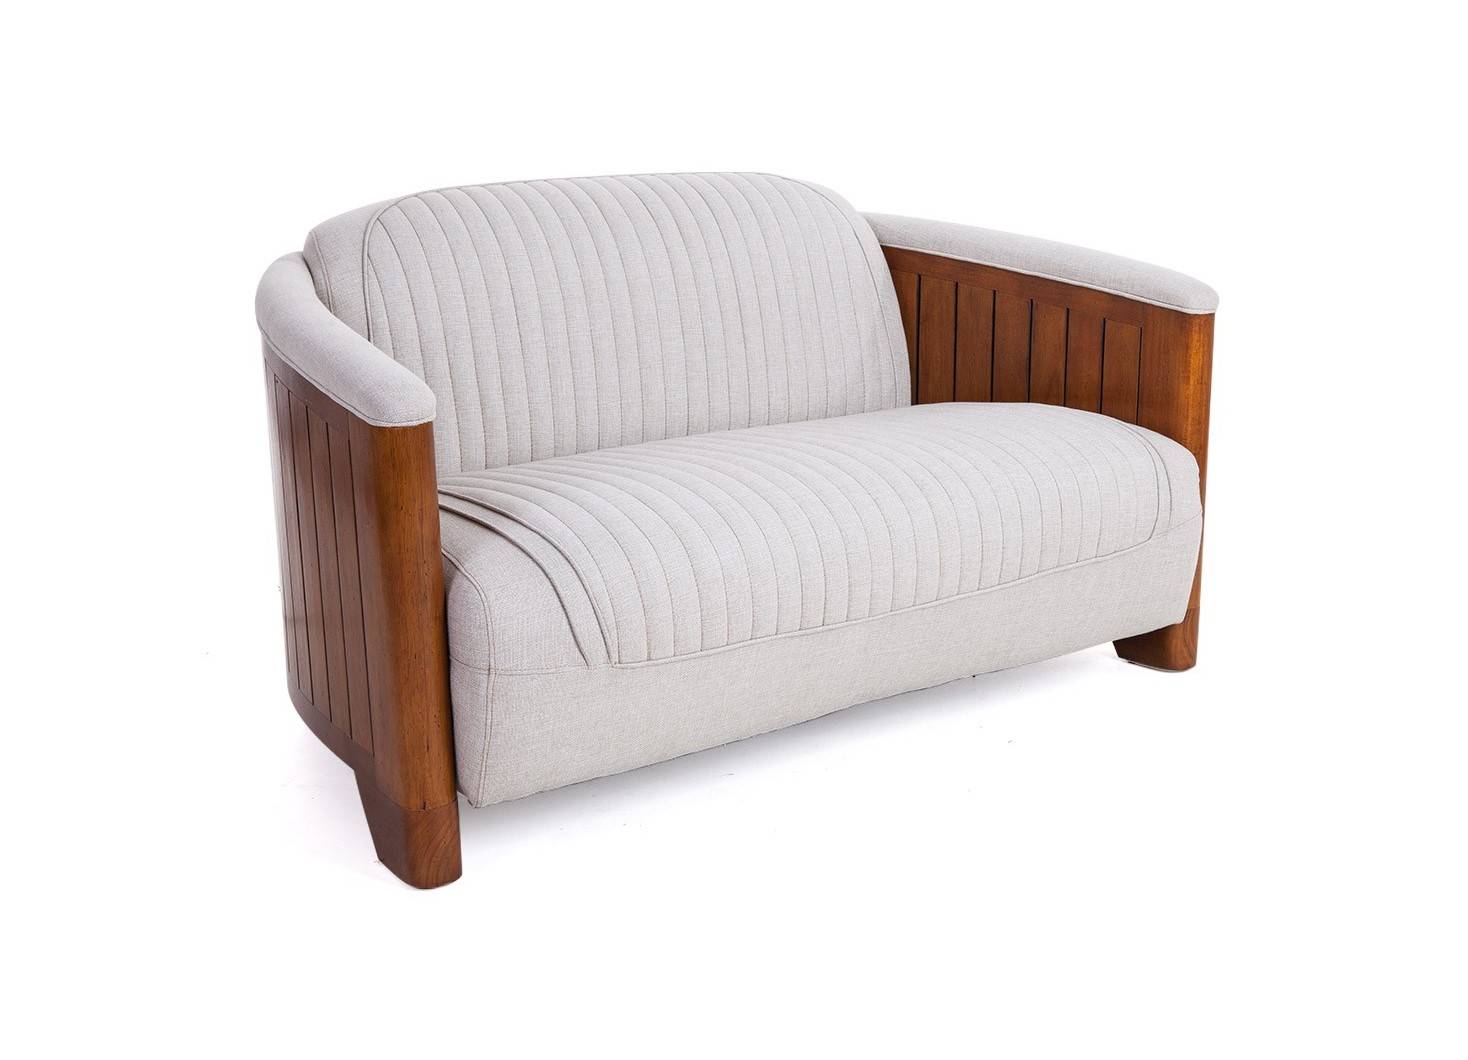 Canoë sofa 3 seater beige leather